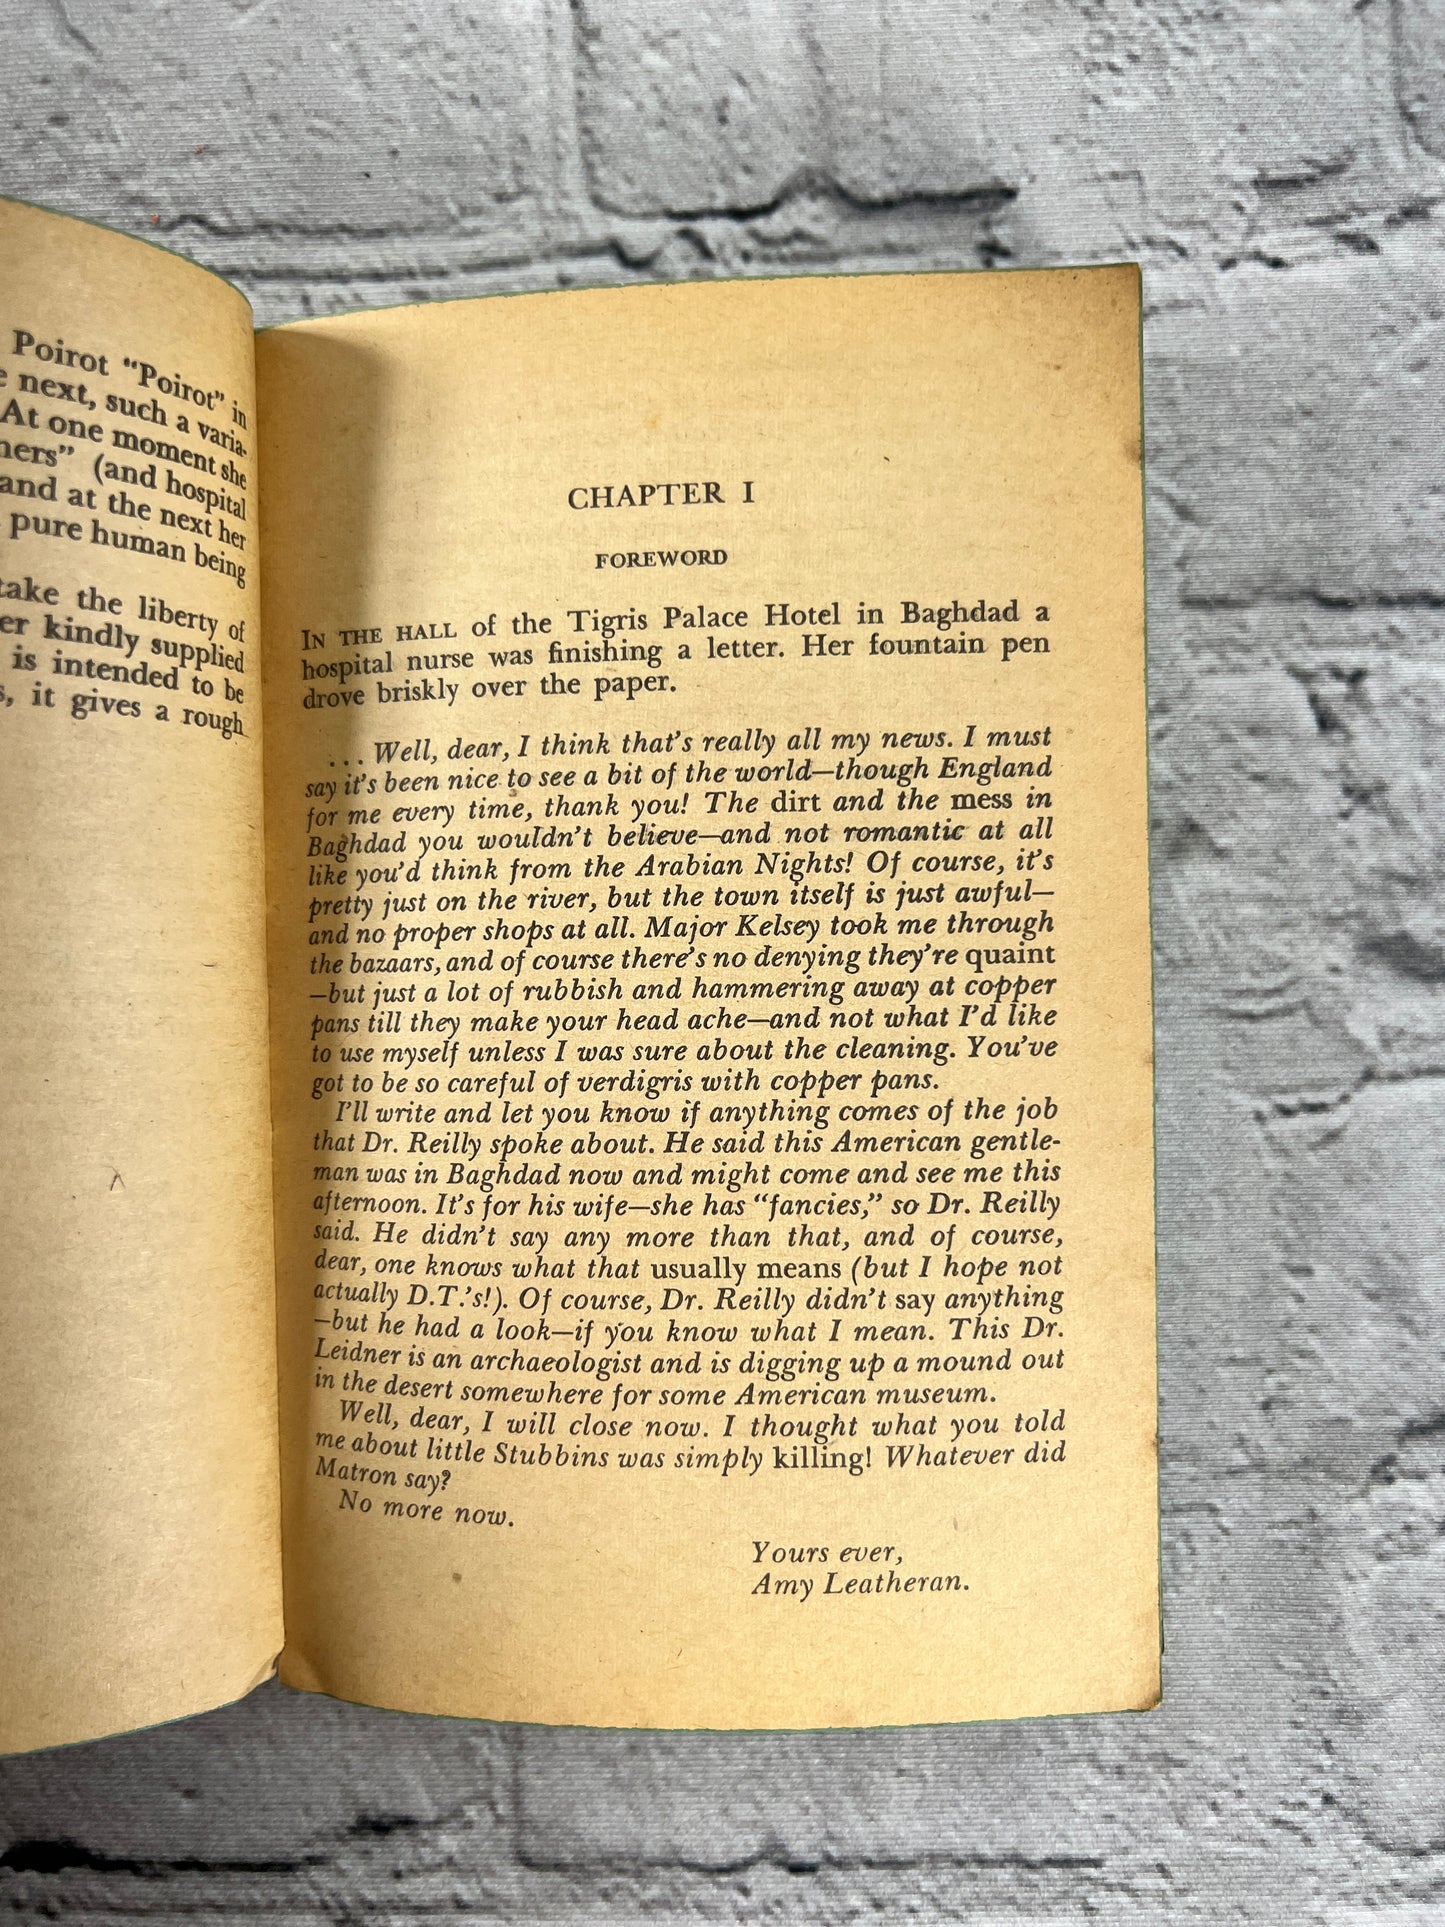 Murder in Mesoptamia by Agatha Christie A Hercule Poirot Mystery [1961 · Dell 1st Print]